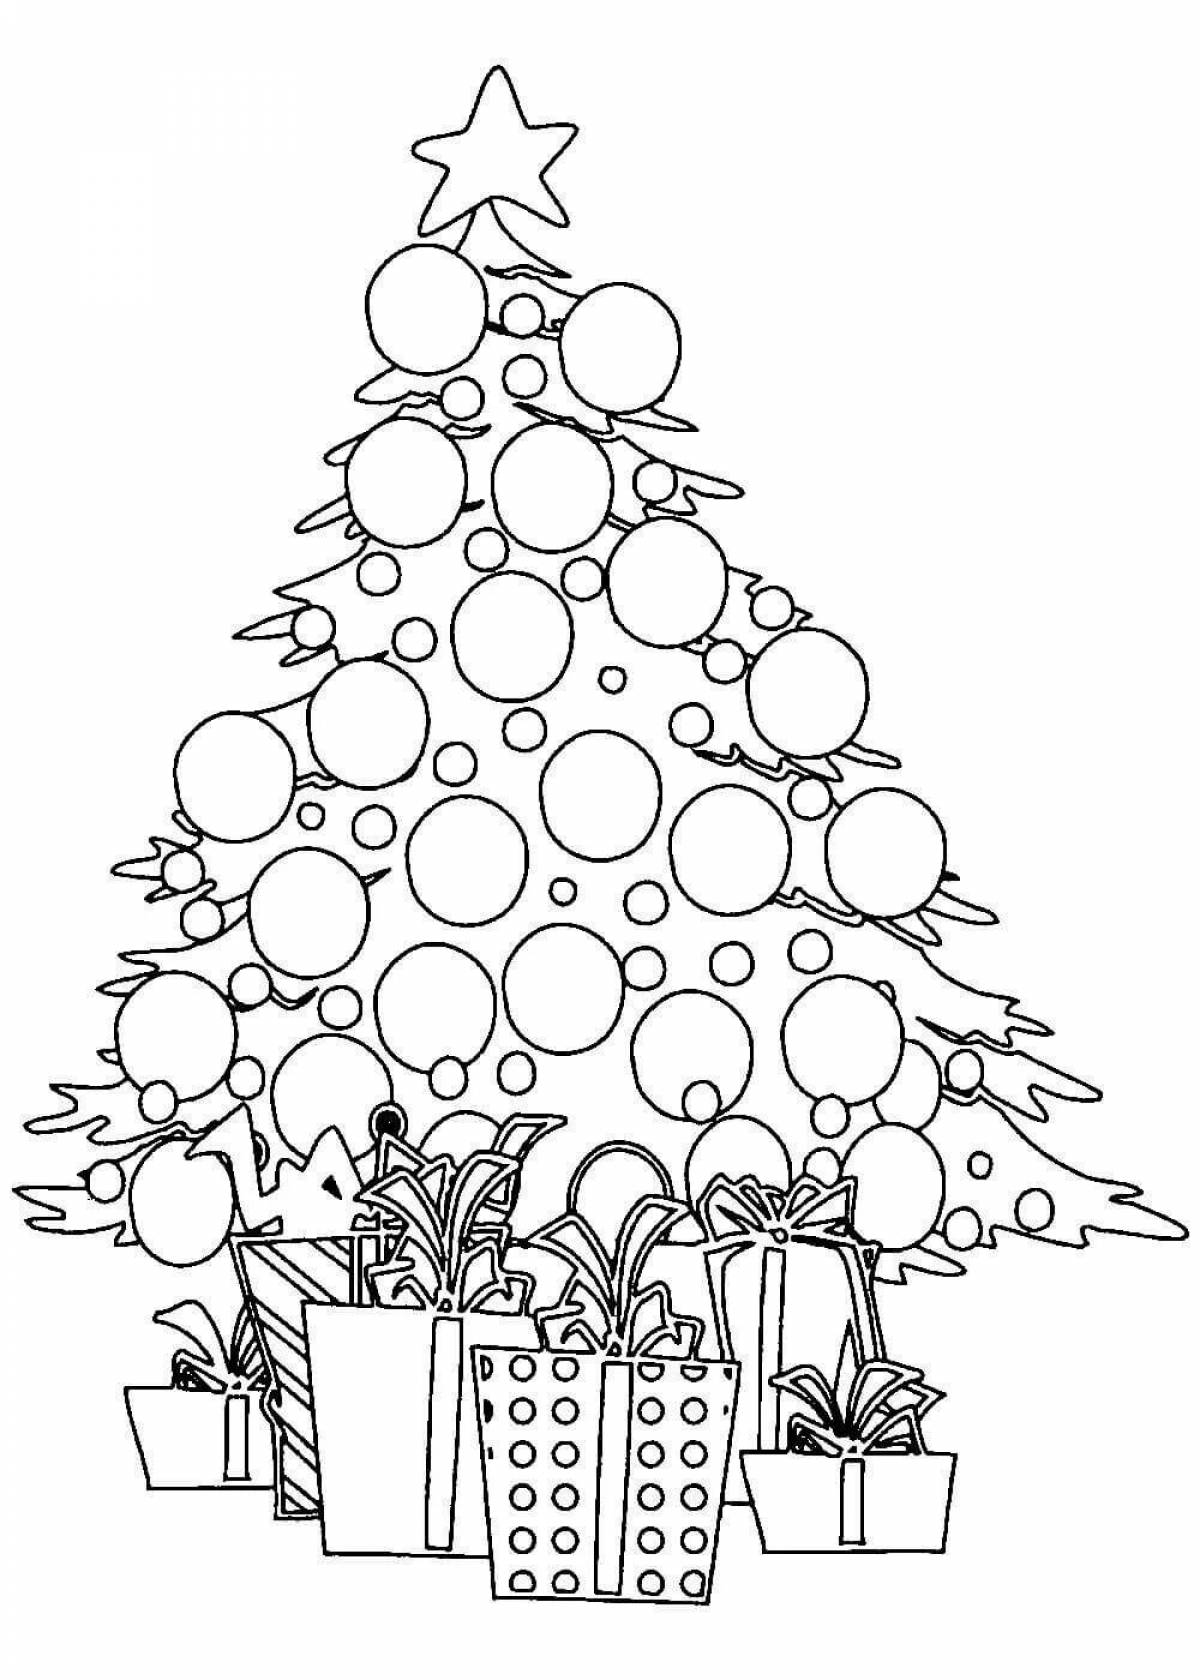 Christmas tree with balls for kids #9